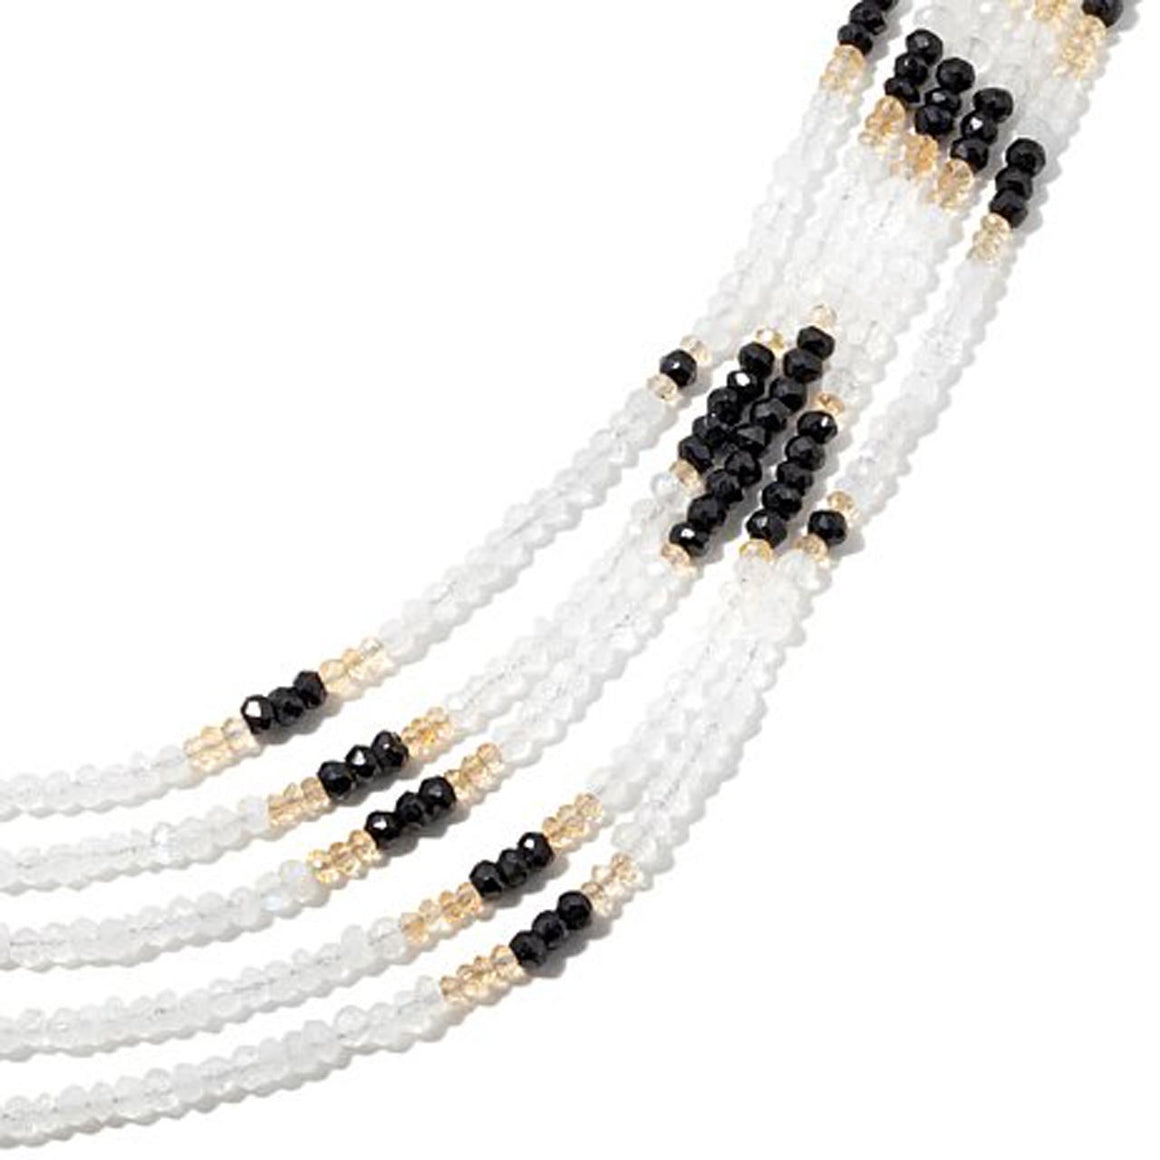 Rainbow Moonstone, Black Spinel, and Citrine Gemstone Bead Necklace